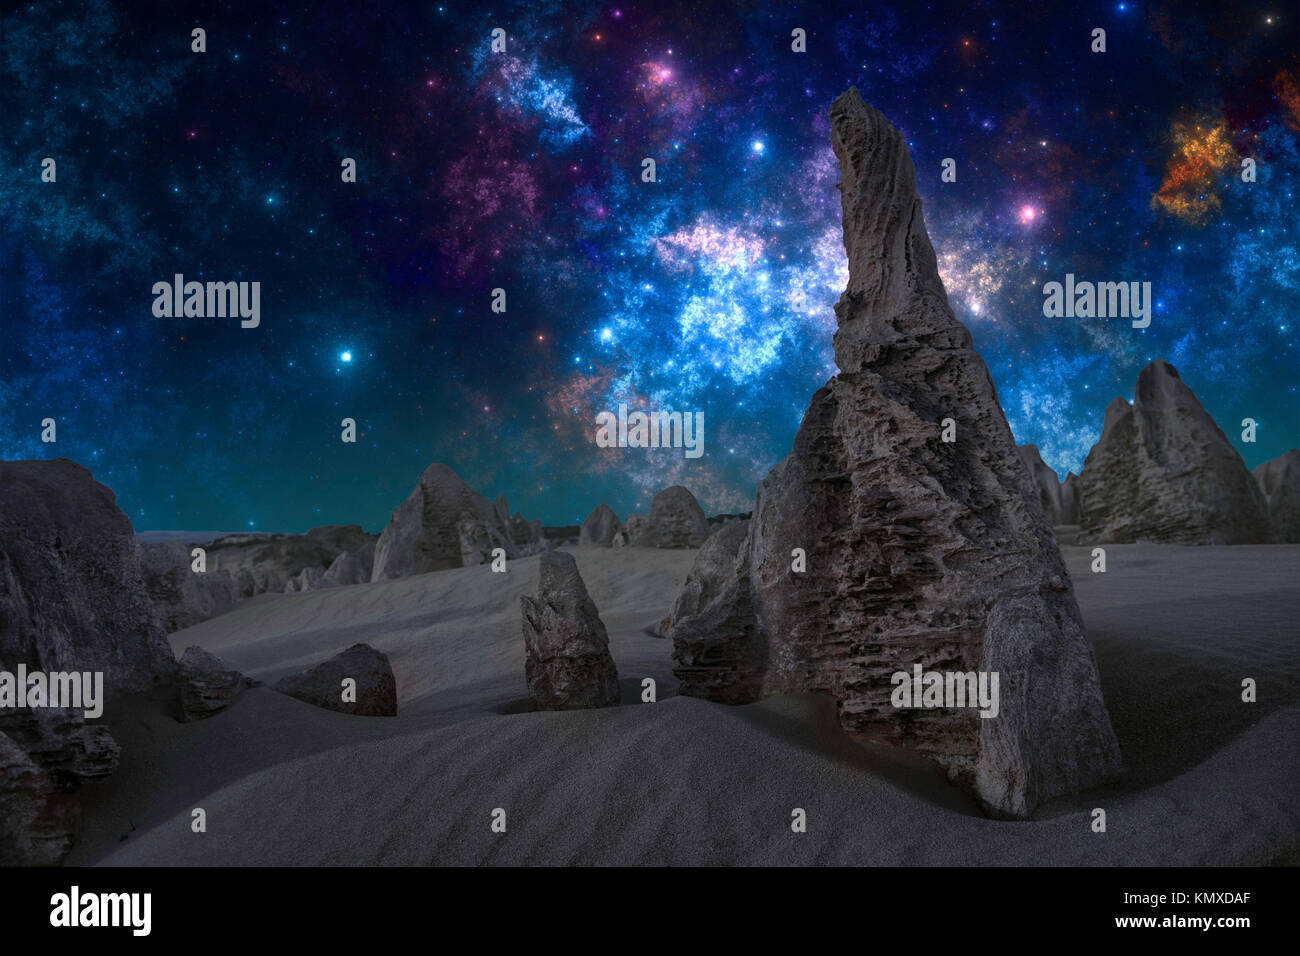 Night on the alien planet, scifi illustration Stock Photo